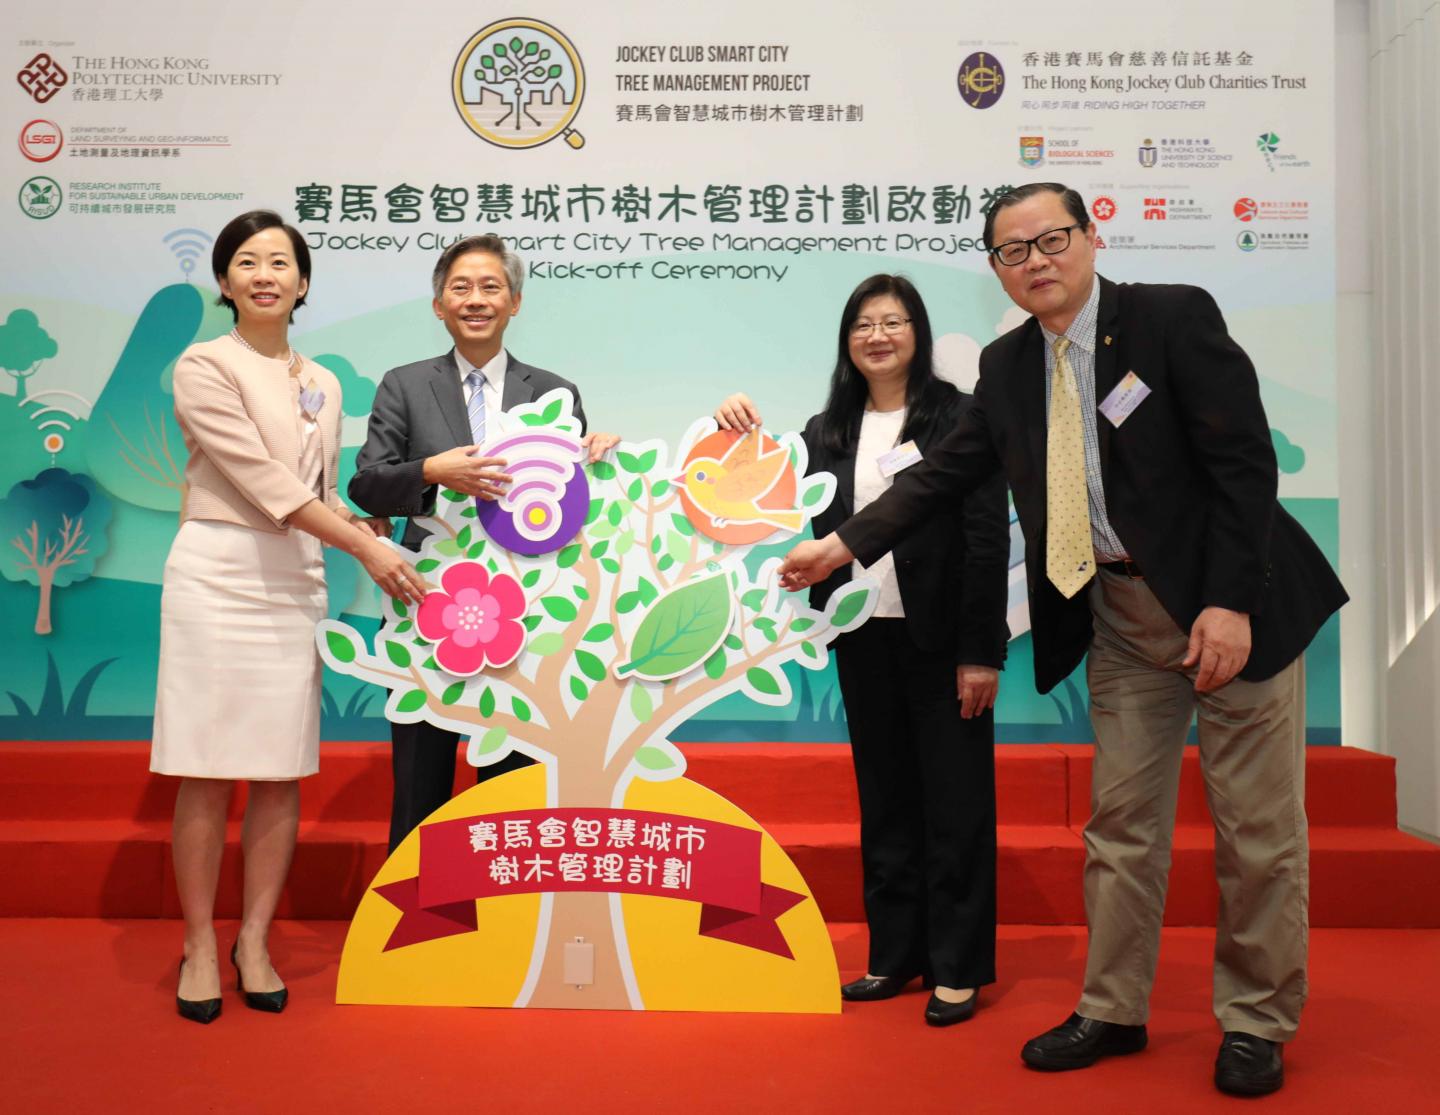 Kick-off Ceremony of the Jockey Club Smart City Tree Management Project